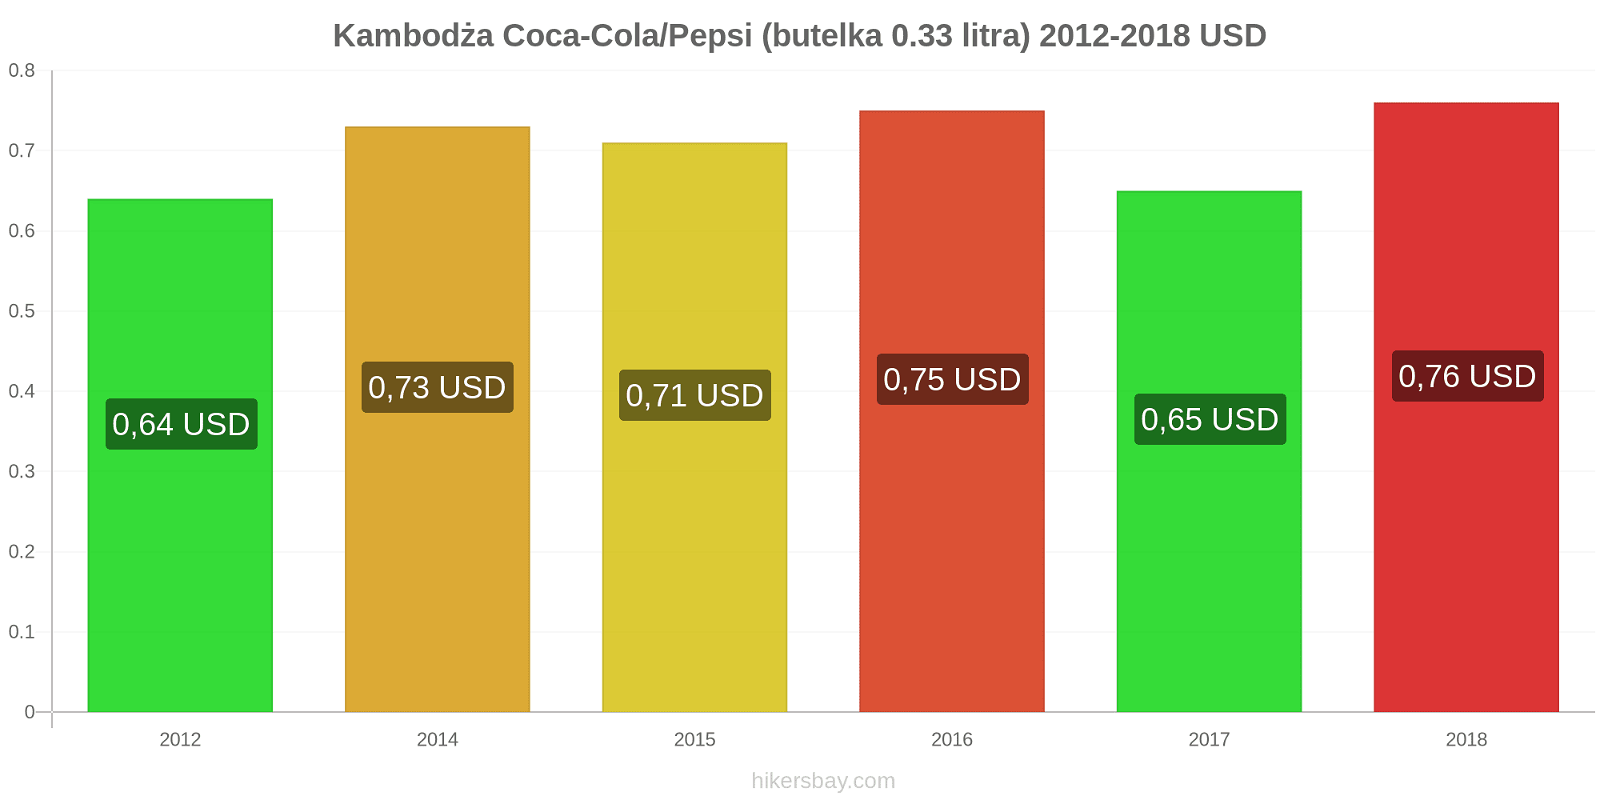 Kambodża zmiany cen Coca-Cola/Pepsi (butelka 0.33 litra) hikersbay.com